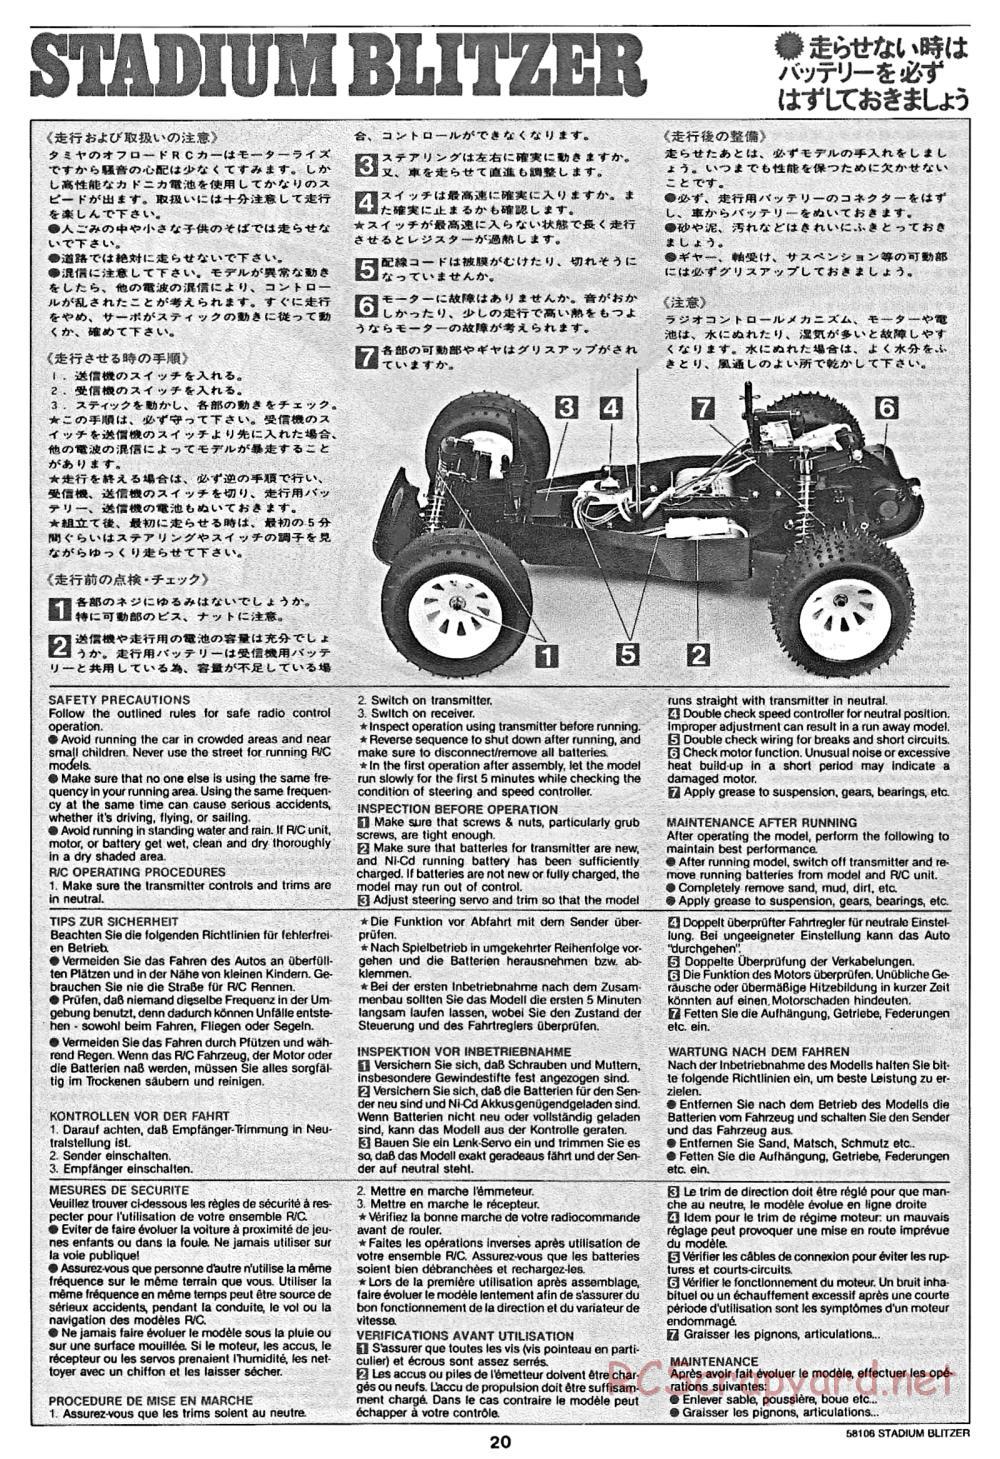 Tamiya - Stadium Blitzer Chassis - Manual - Page 20